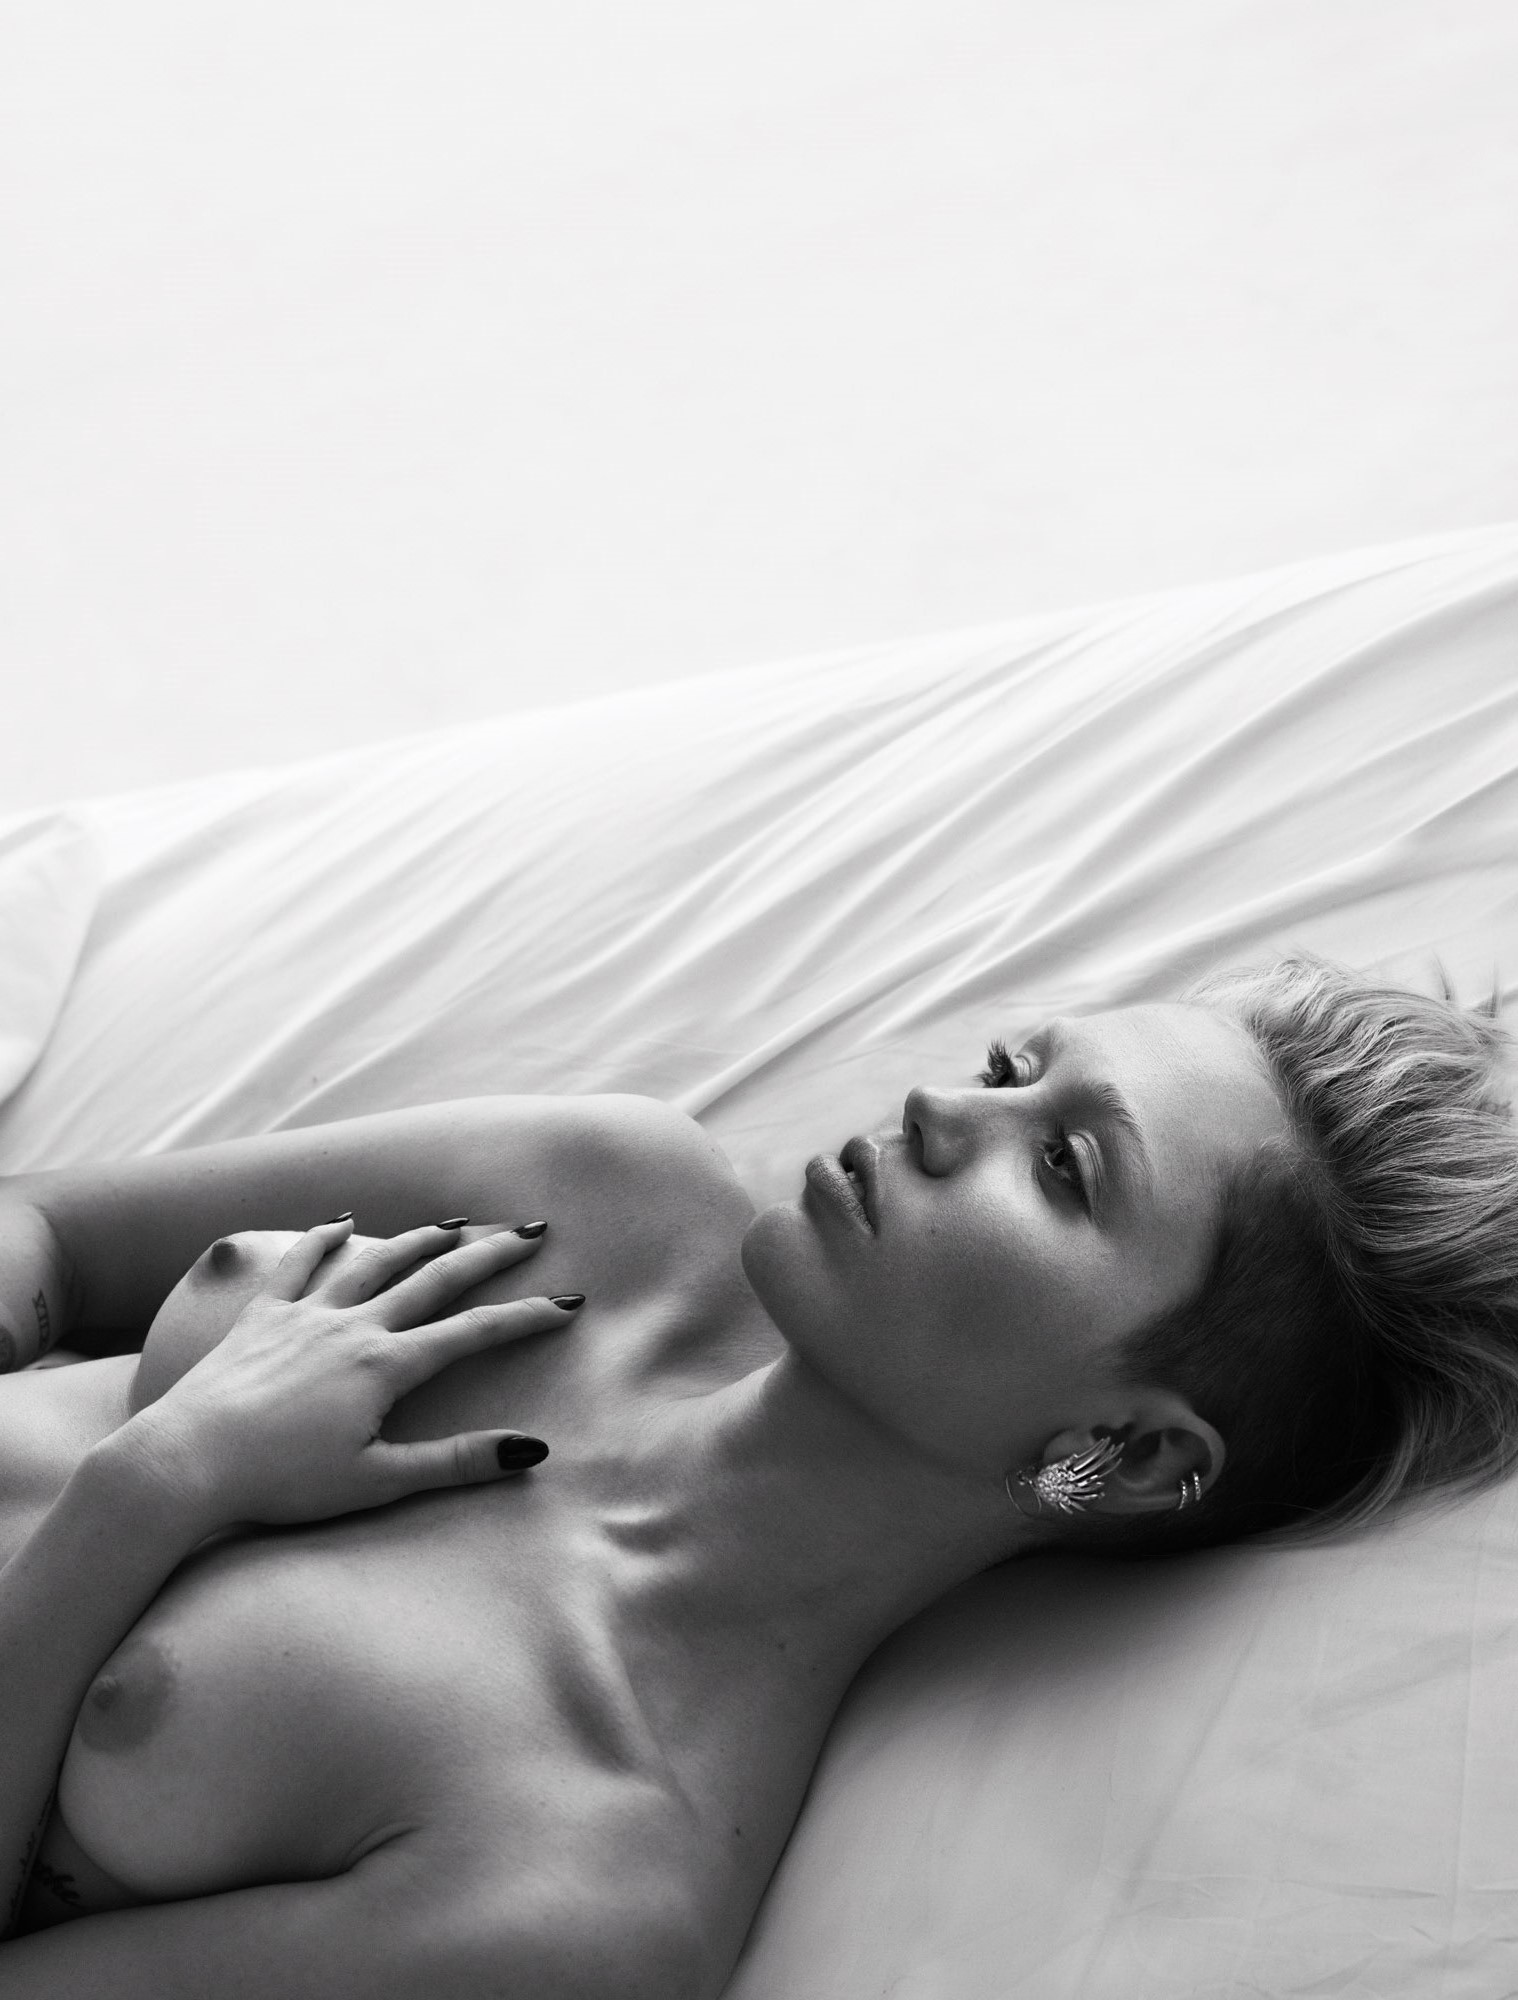  Miley Cyrus Naked Celeb 1411241081759 